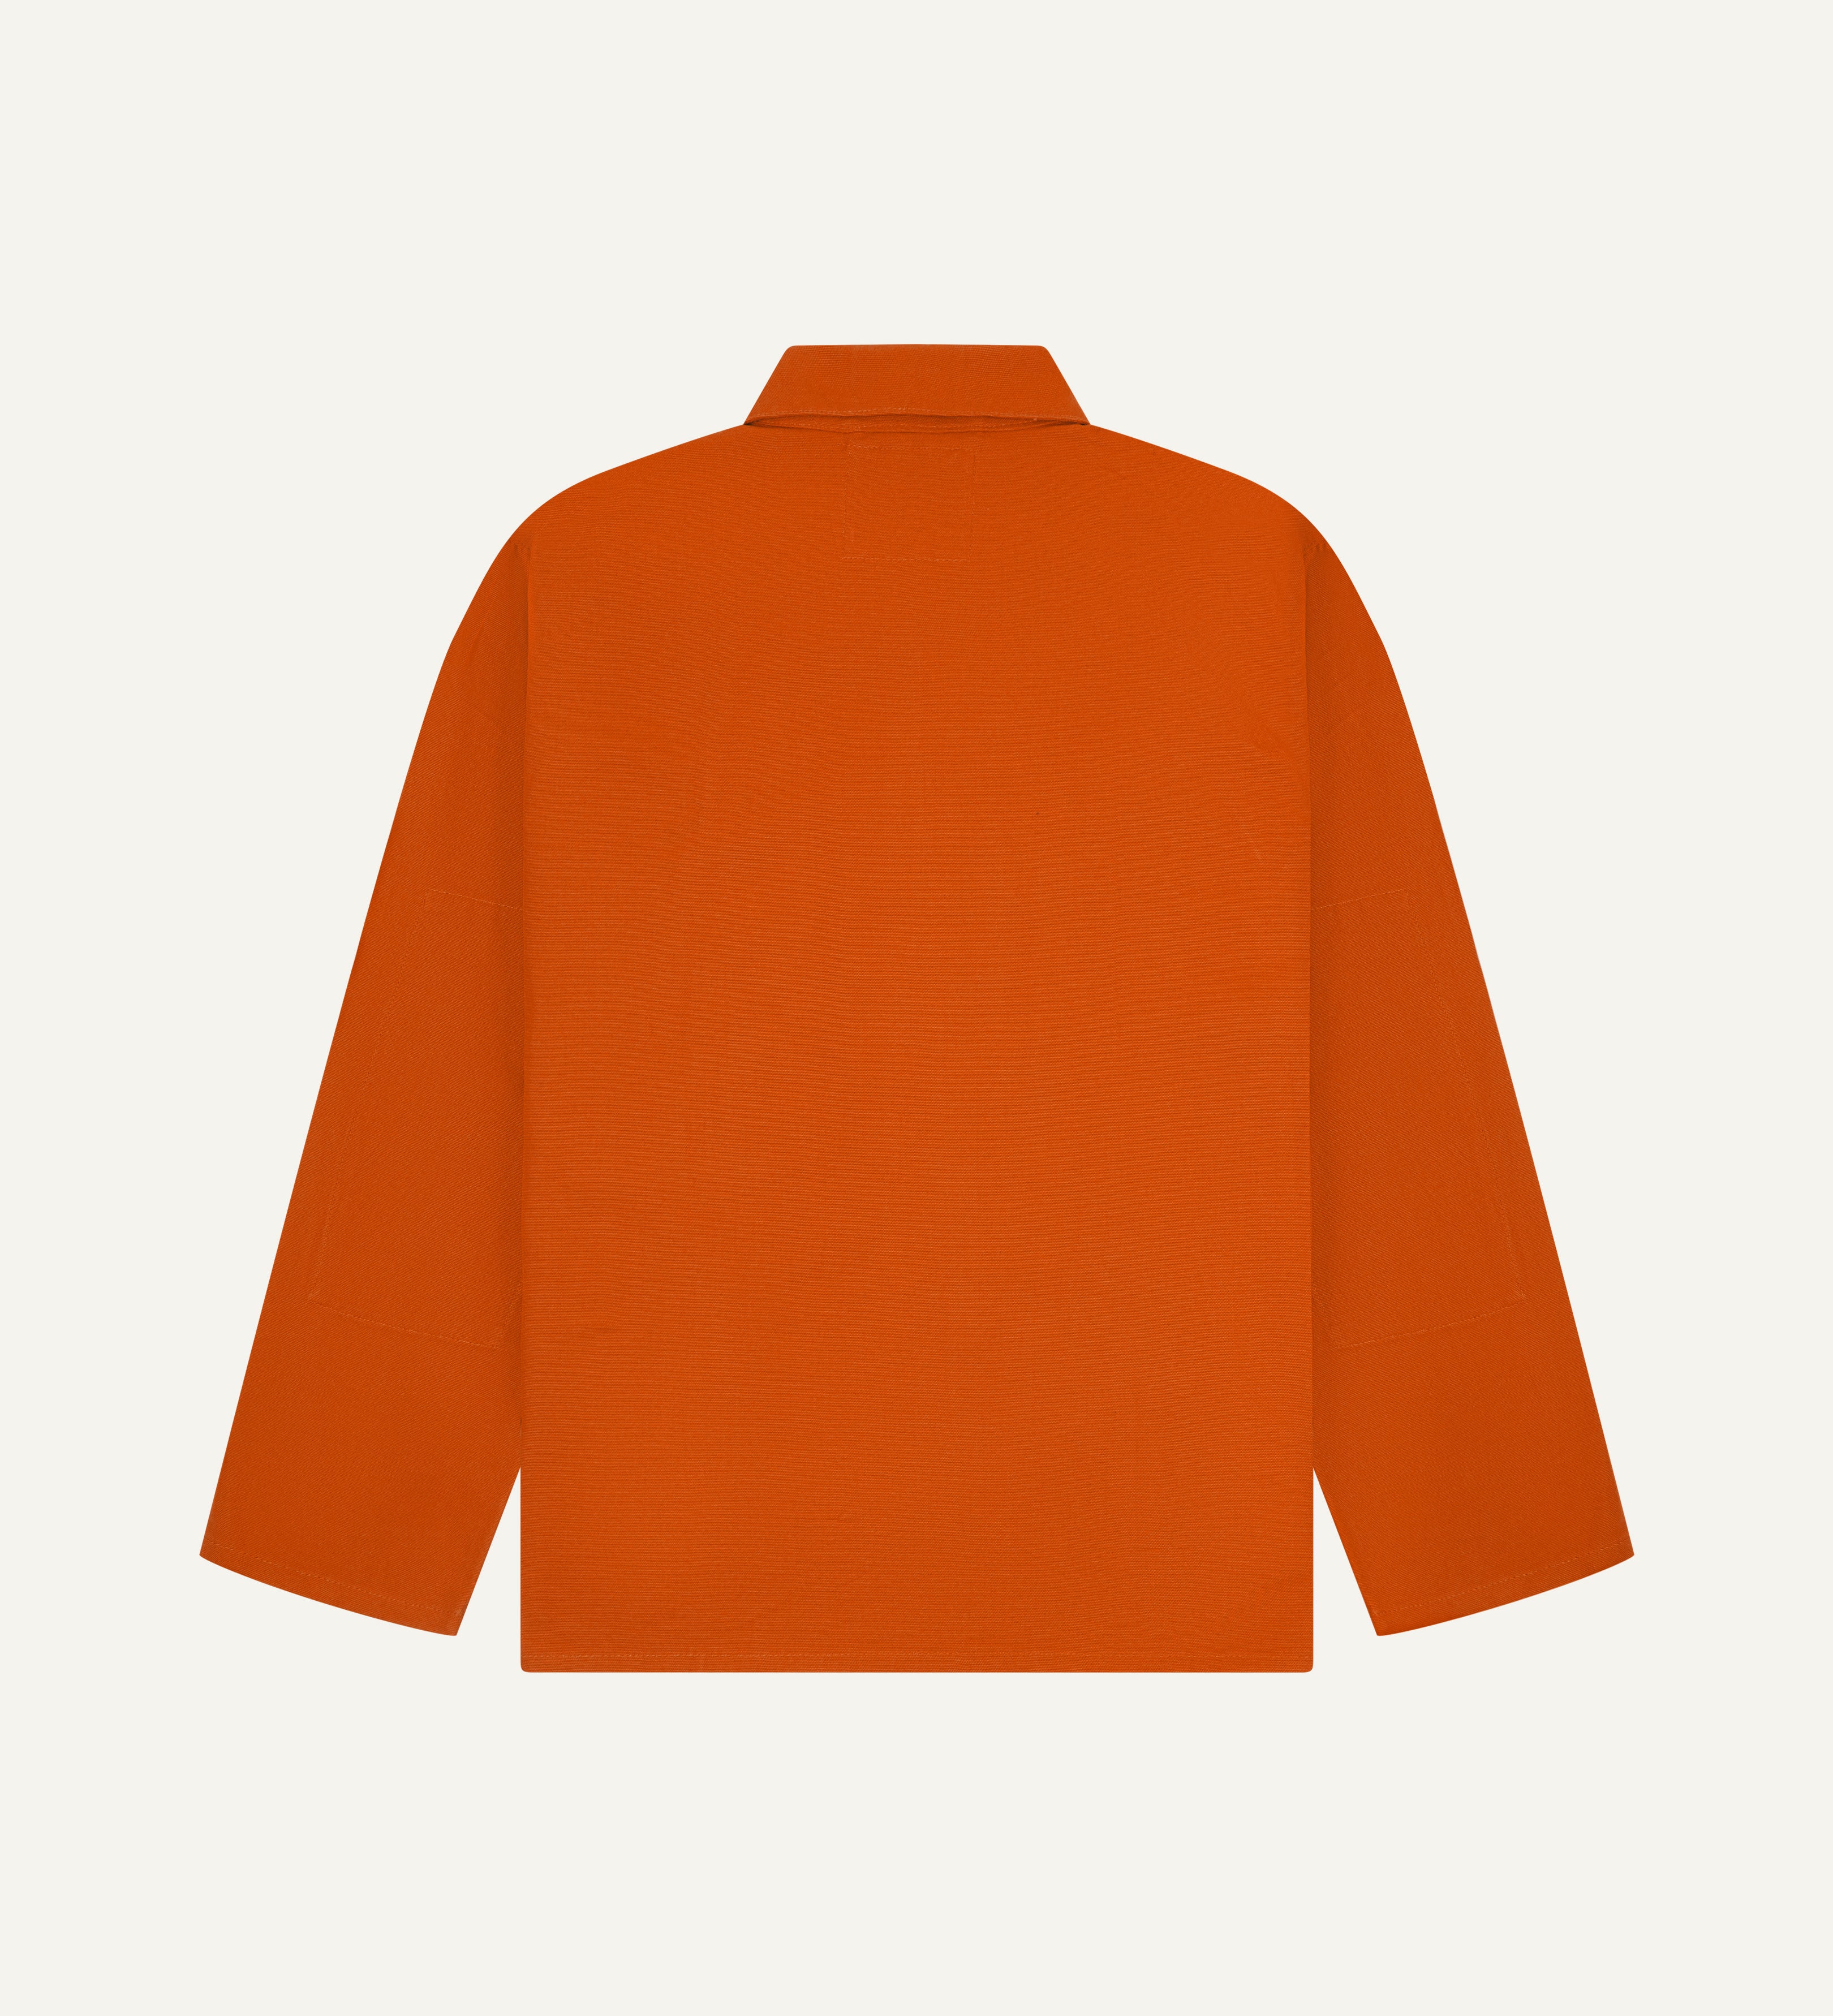 Back view of an uskees orange men's organic cotton shirt jacket